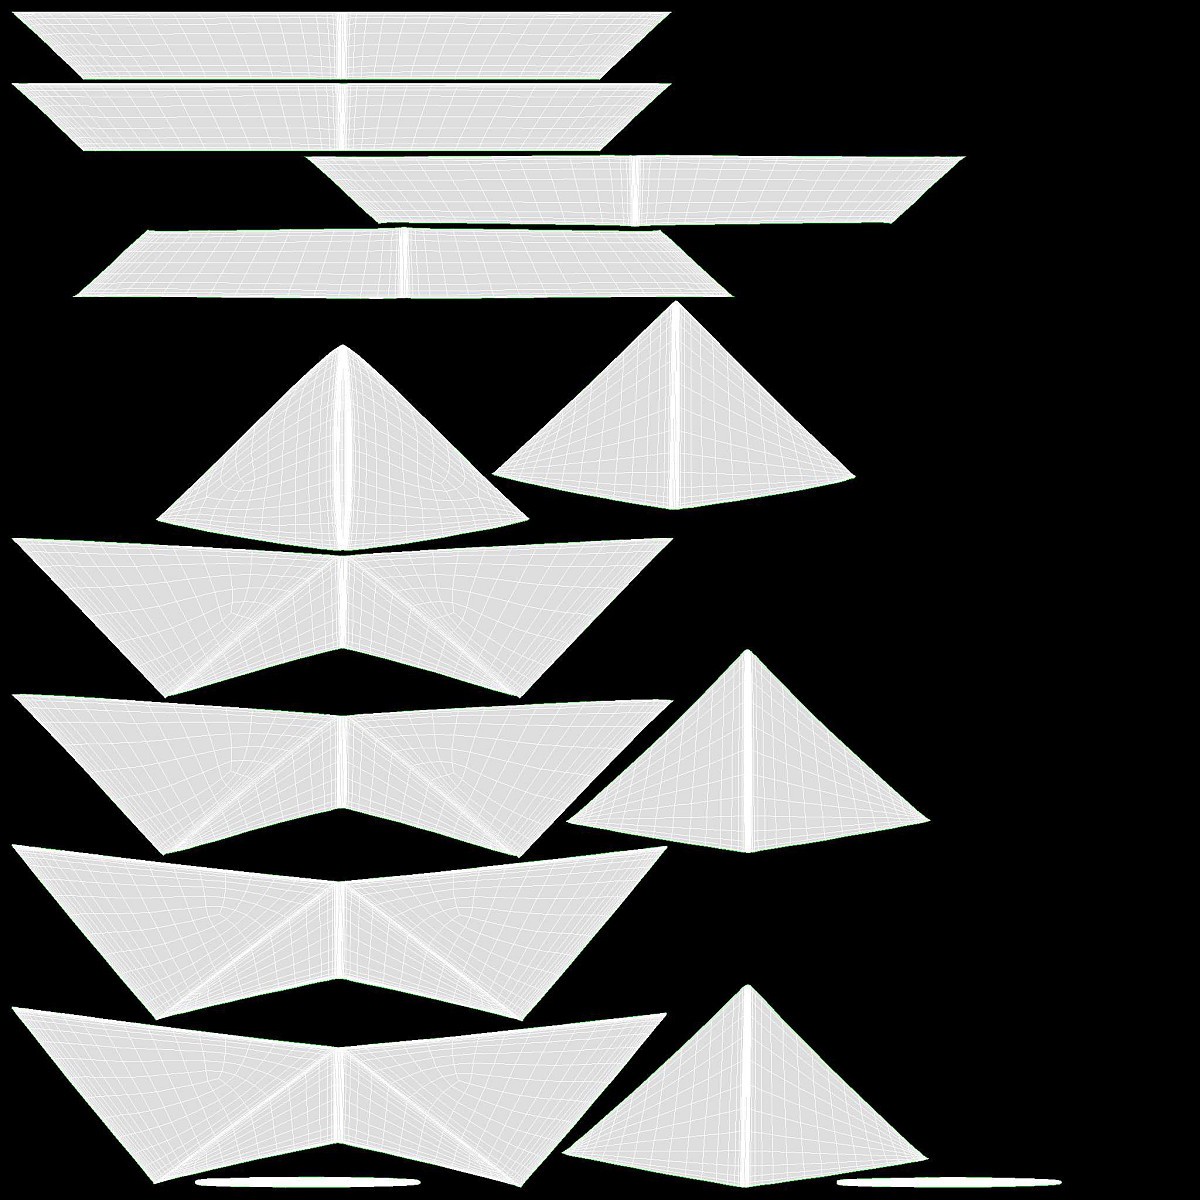 Paper Ship